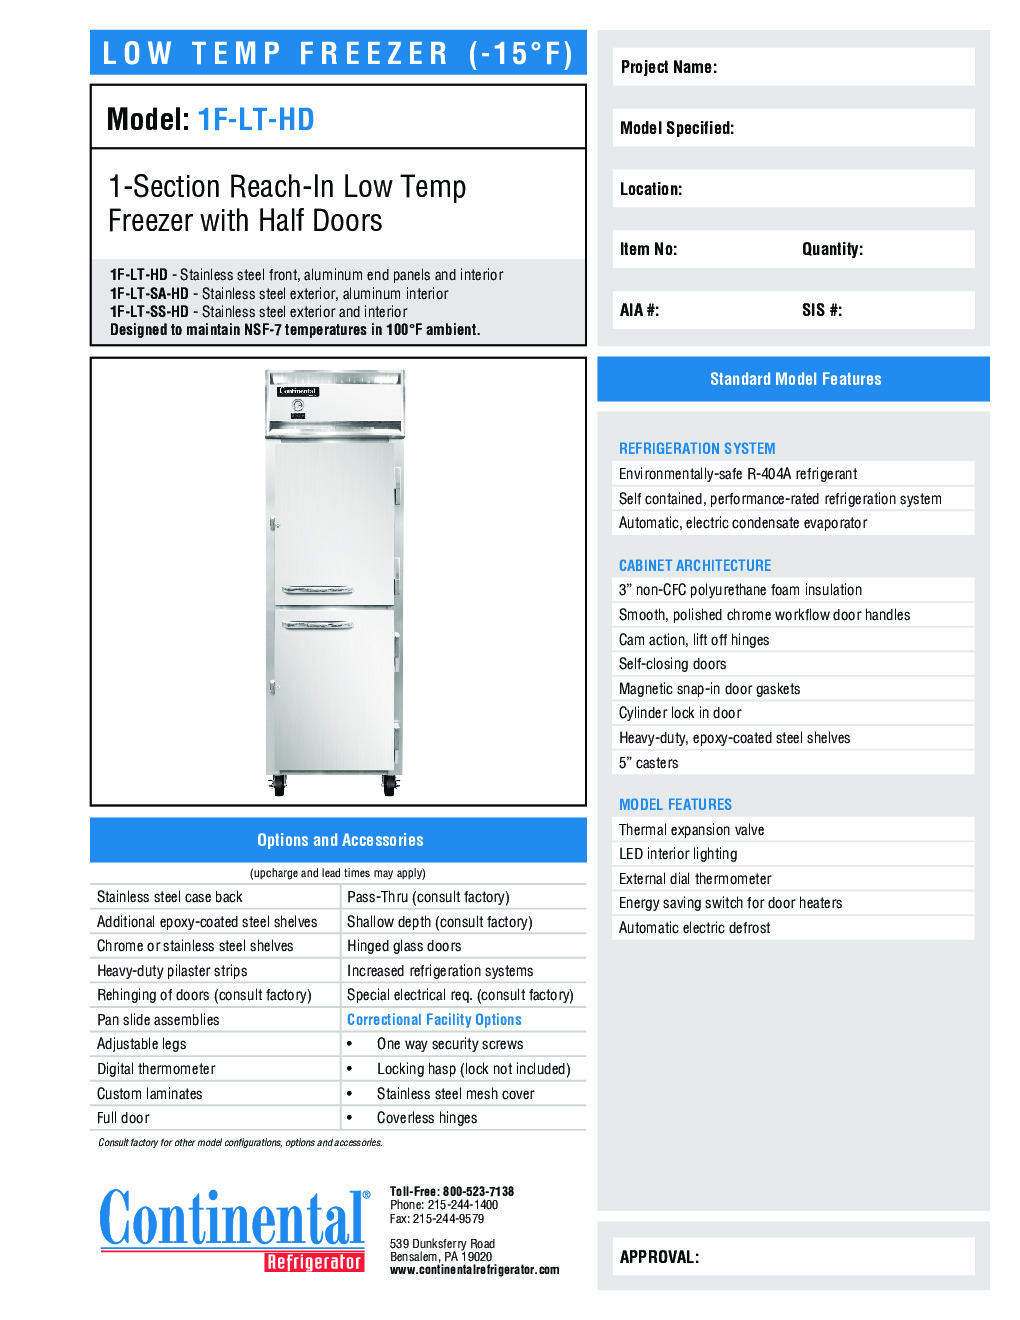 Continental Refrigerator 1F-LT-HD Reach-In Low Temperature Freezer